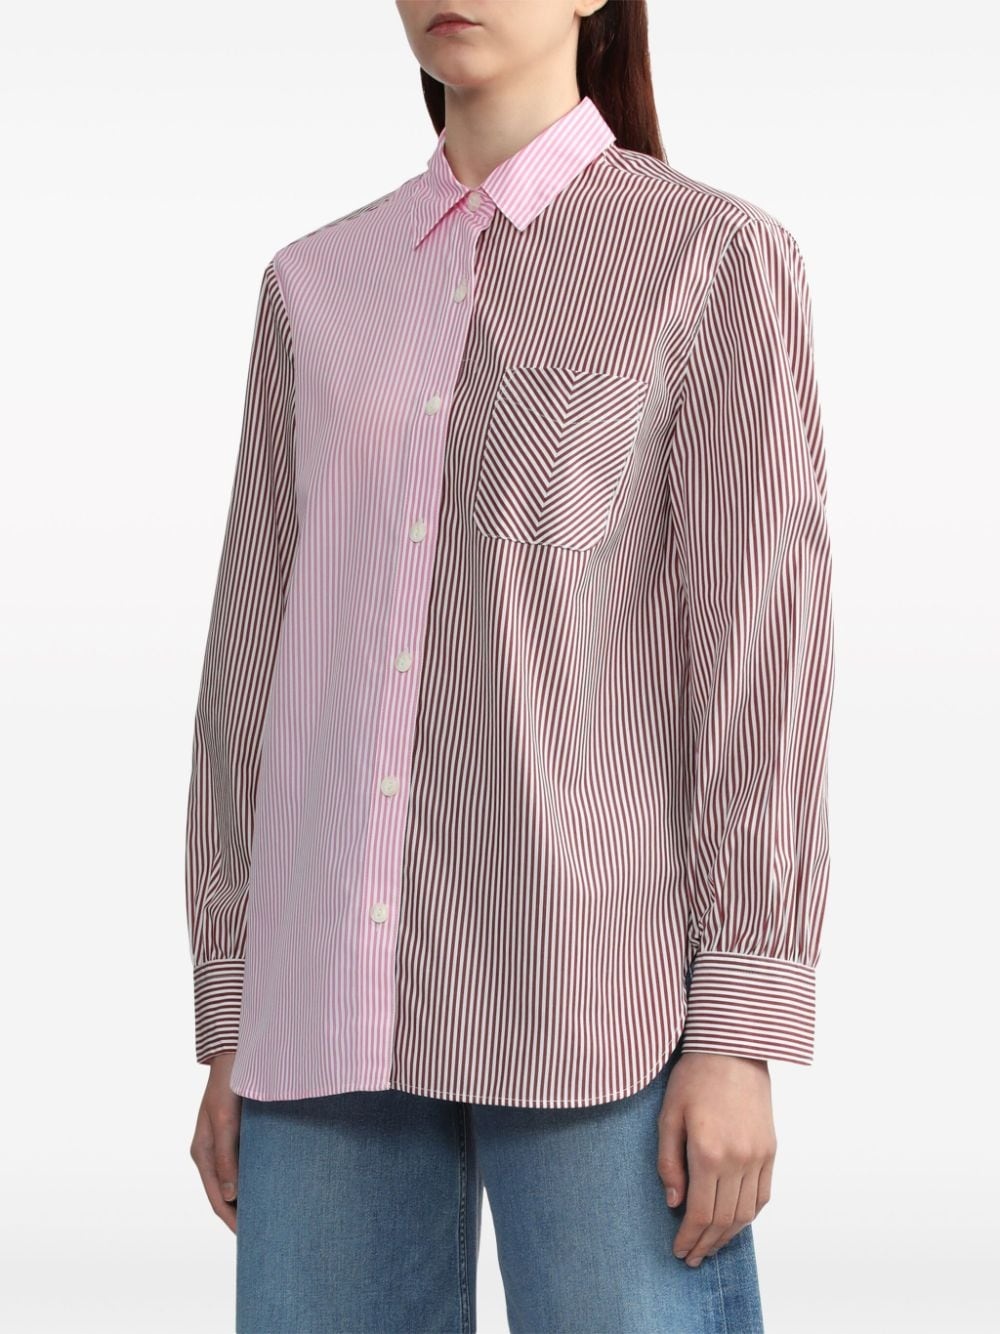 Maxine cotton shirt - 3